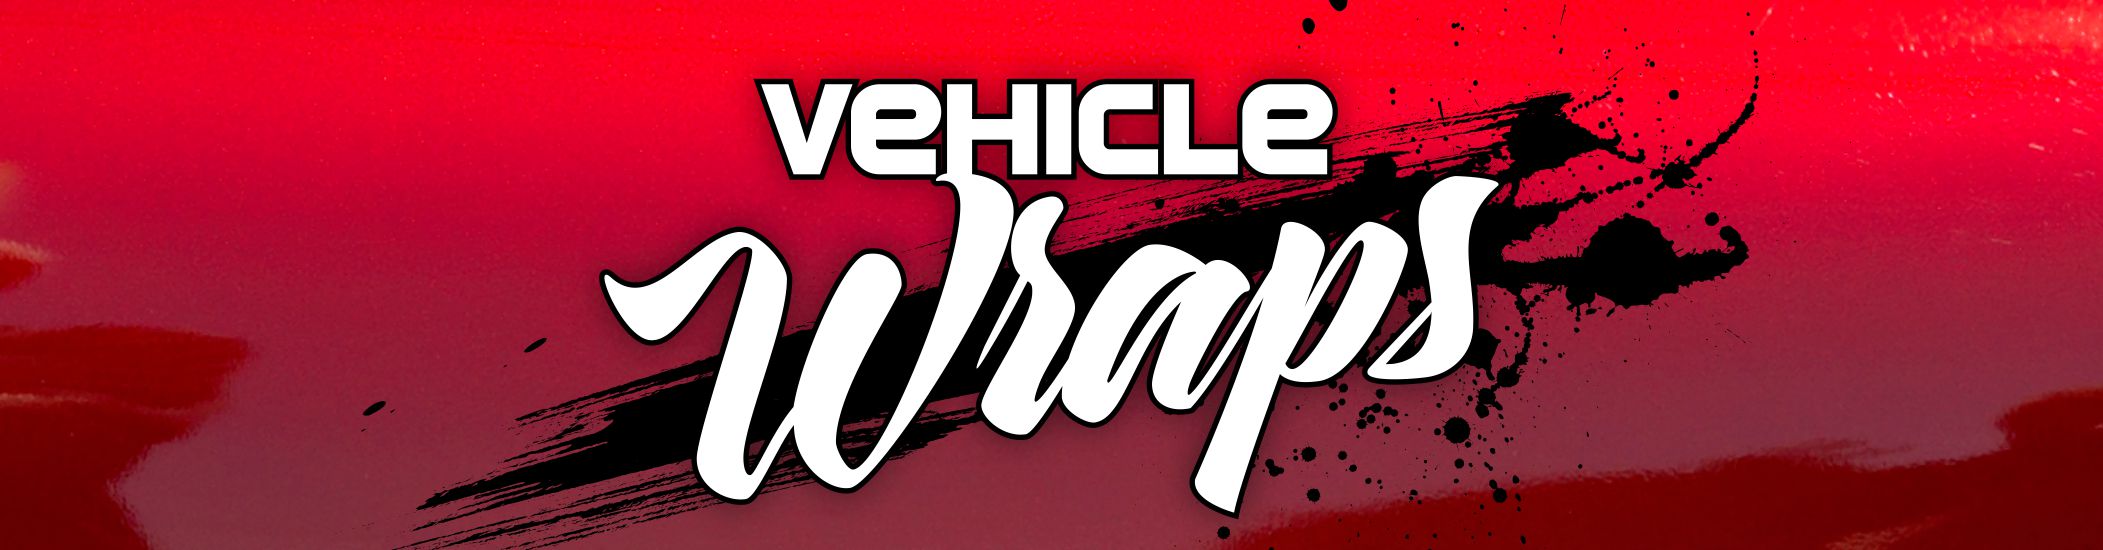 vehicle-graphics-header